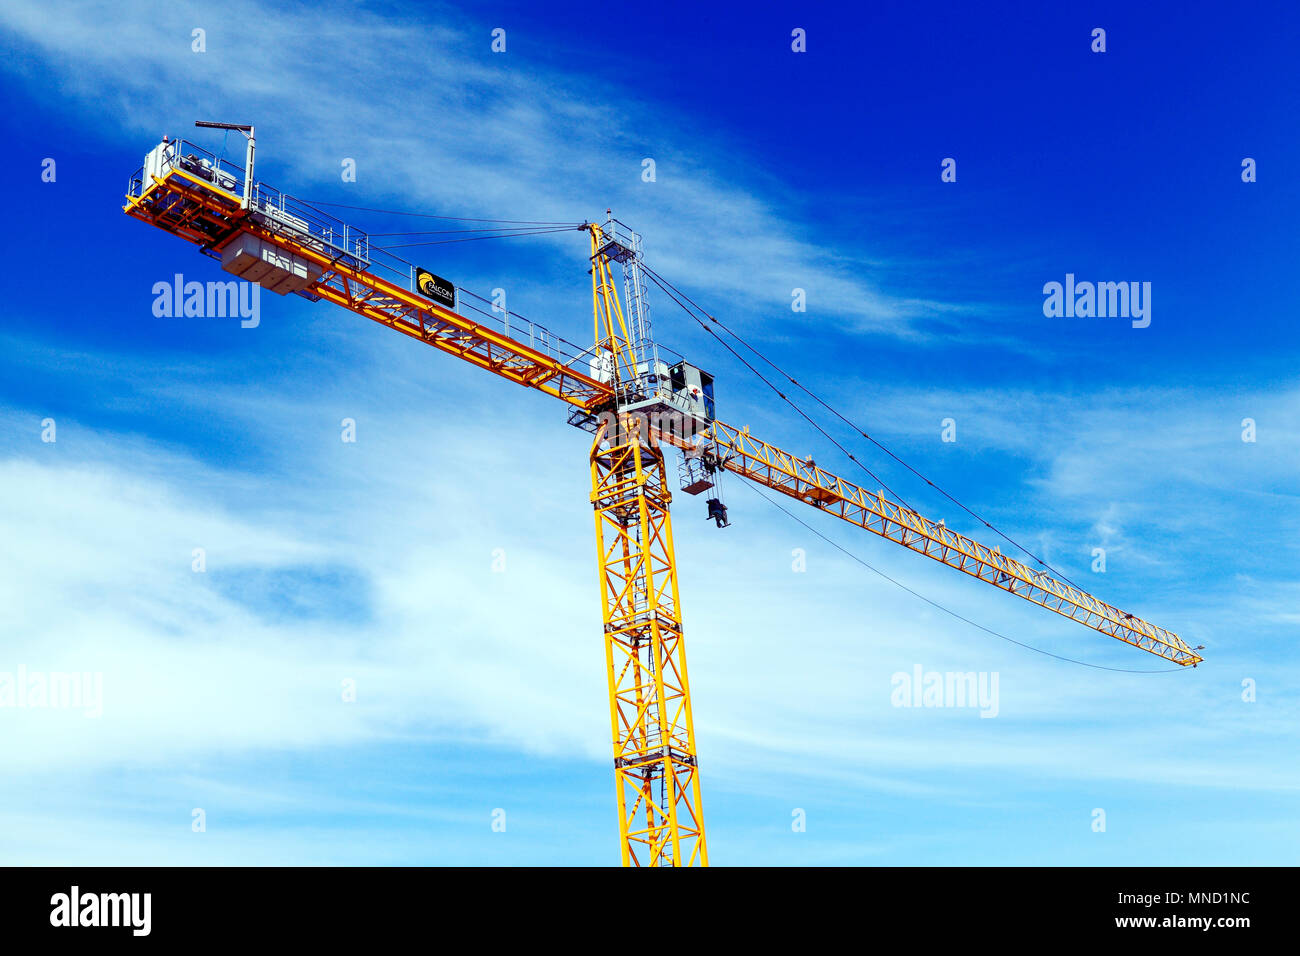 Falcon Tower Crane Services, construction crane, building site, Hunstanton, Norfolk, UK, England, detail, building, industry Stock Photo